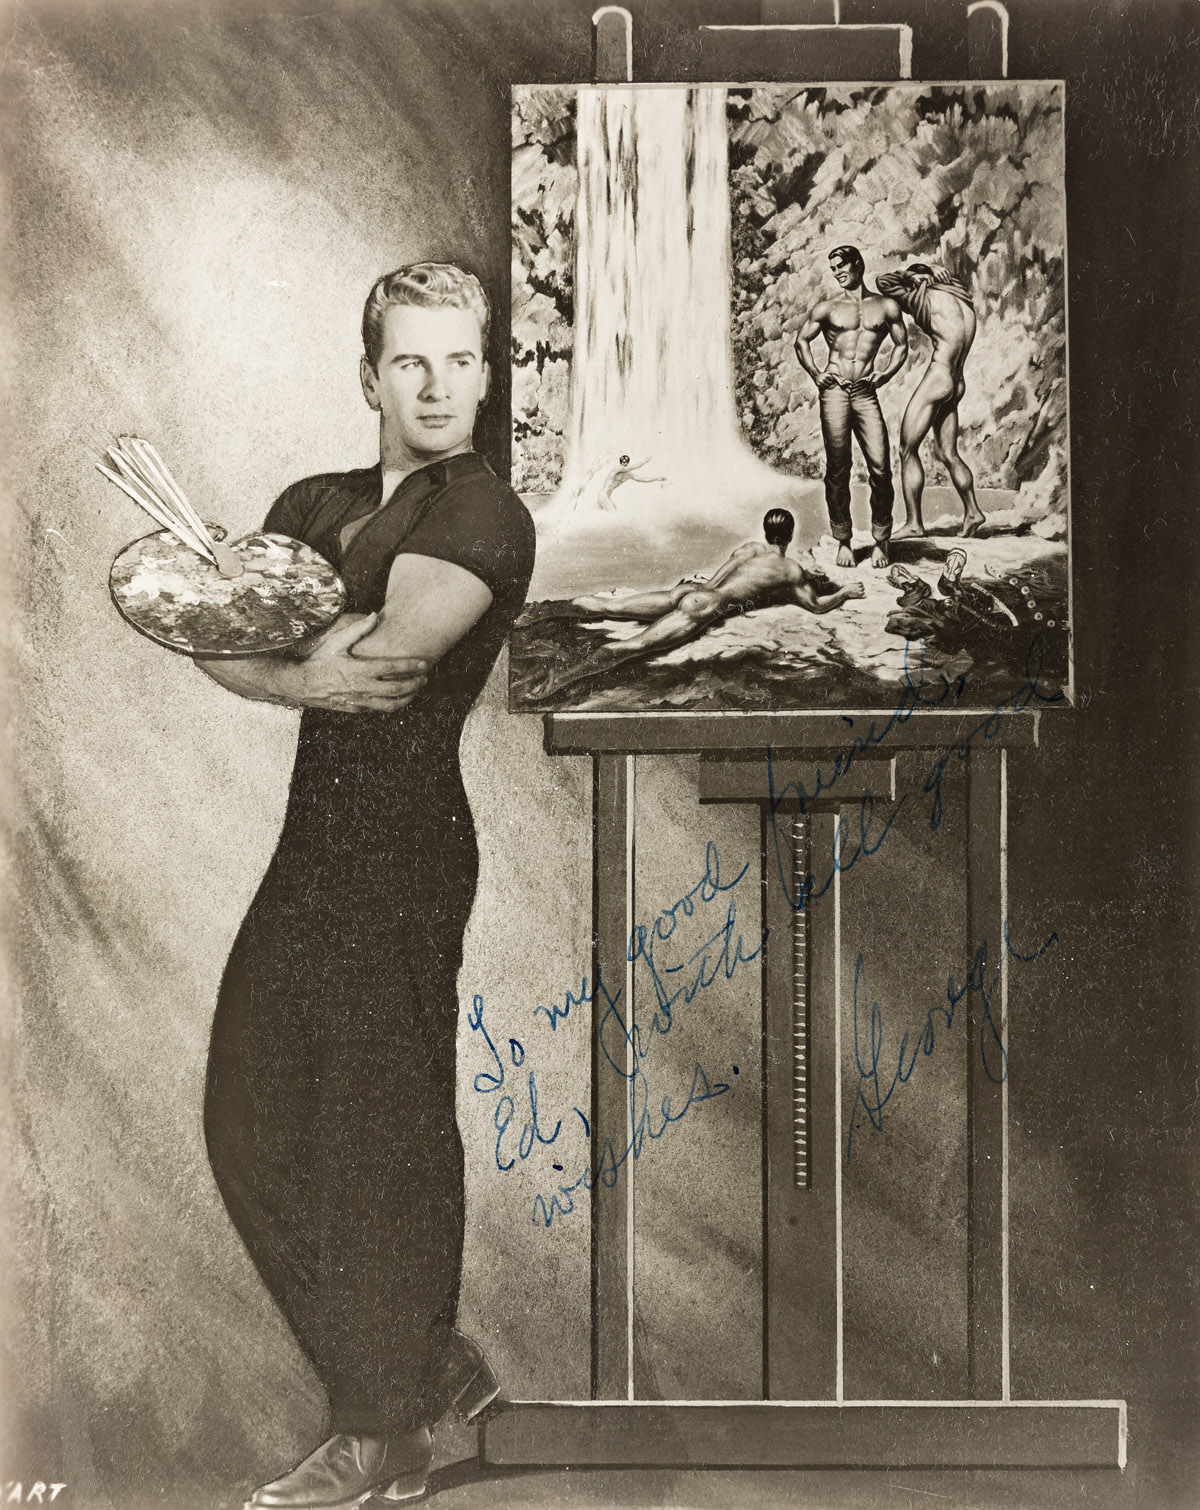 (GEORGE QUAINTANCE) A signed photograph of the artist George Quaintance (1902-1957).